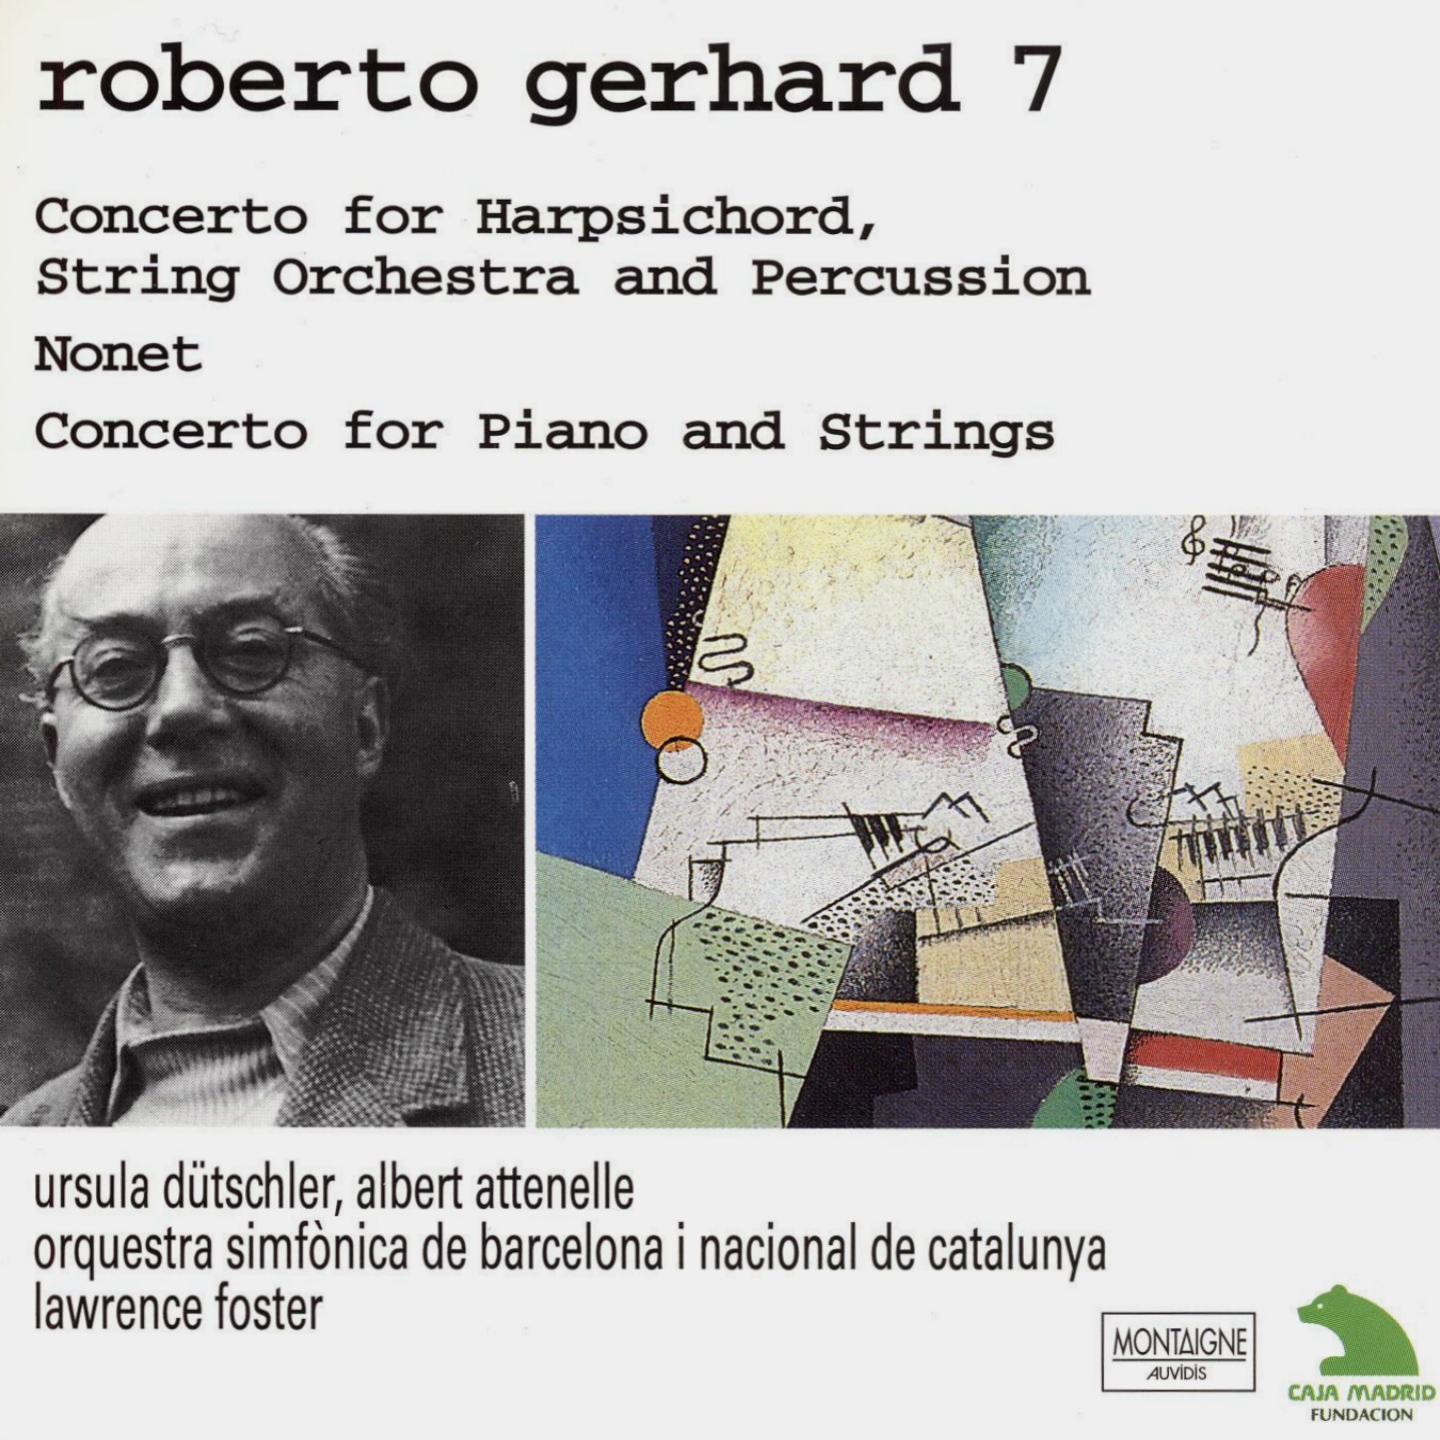 Concerto for Piano and Strings: I. Tiento. Allegro